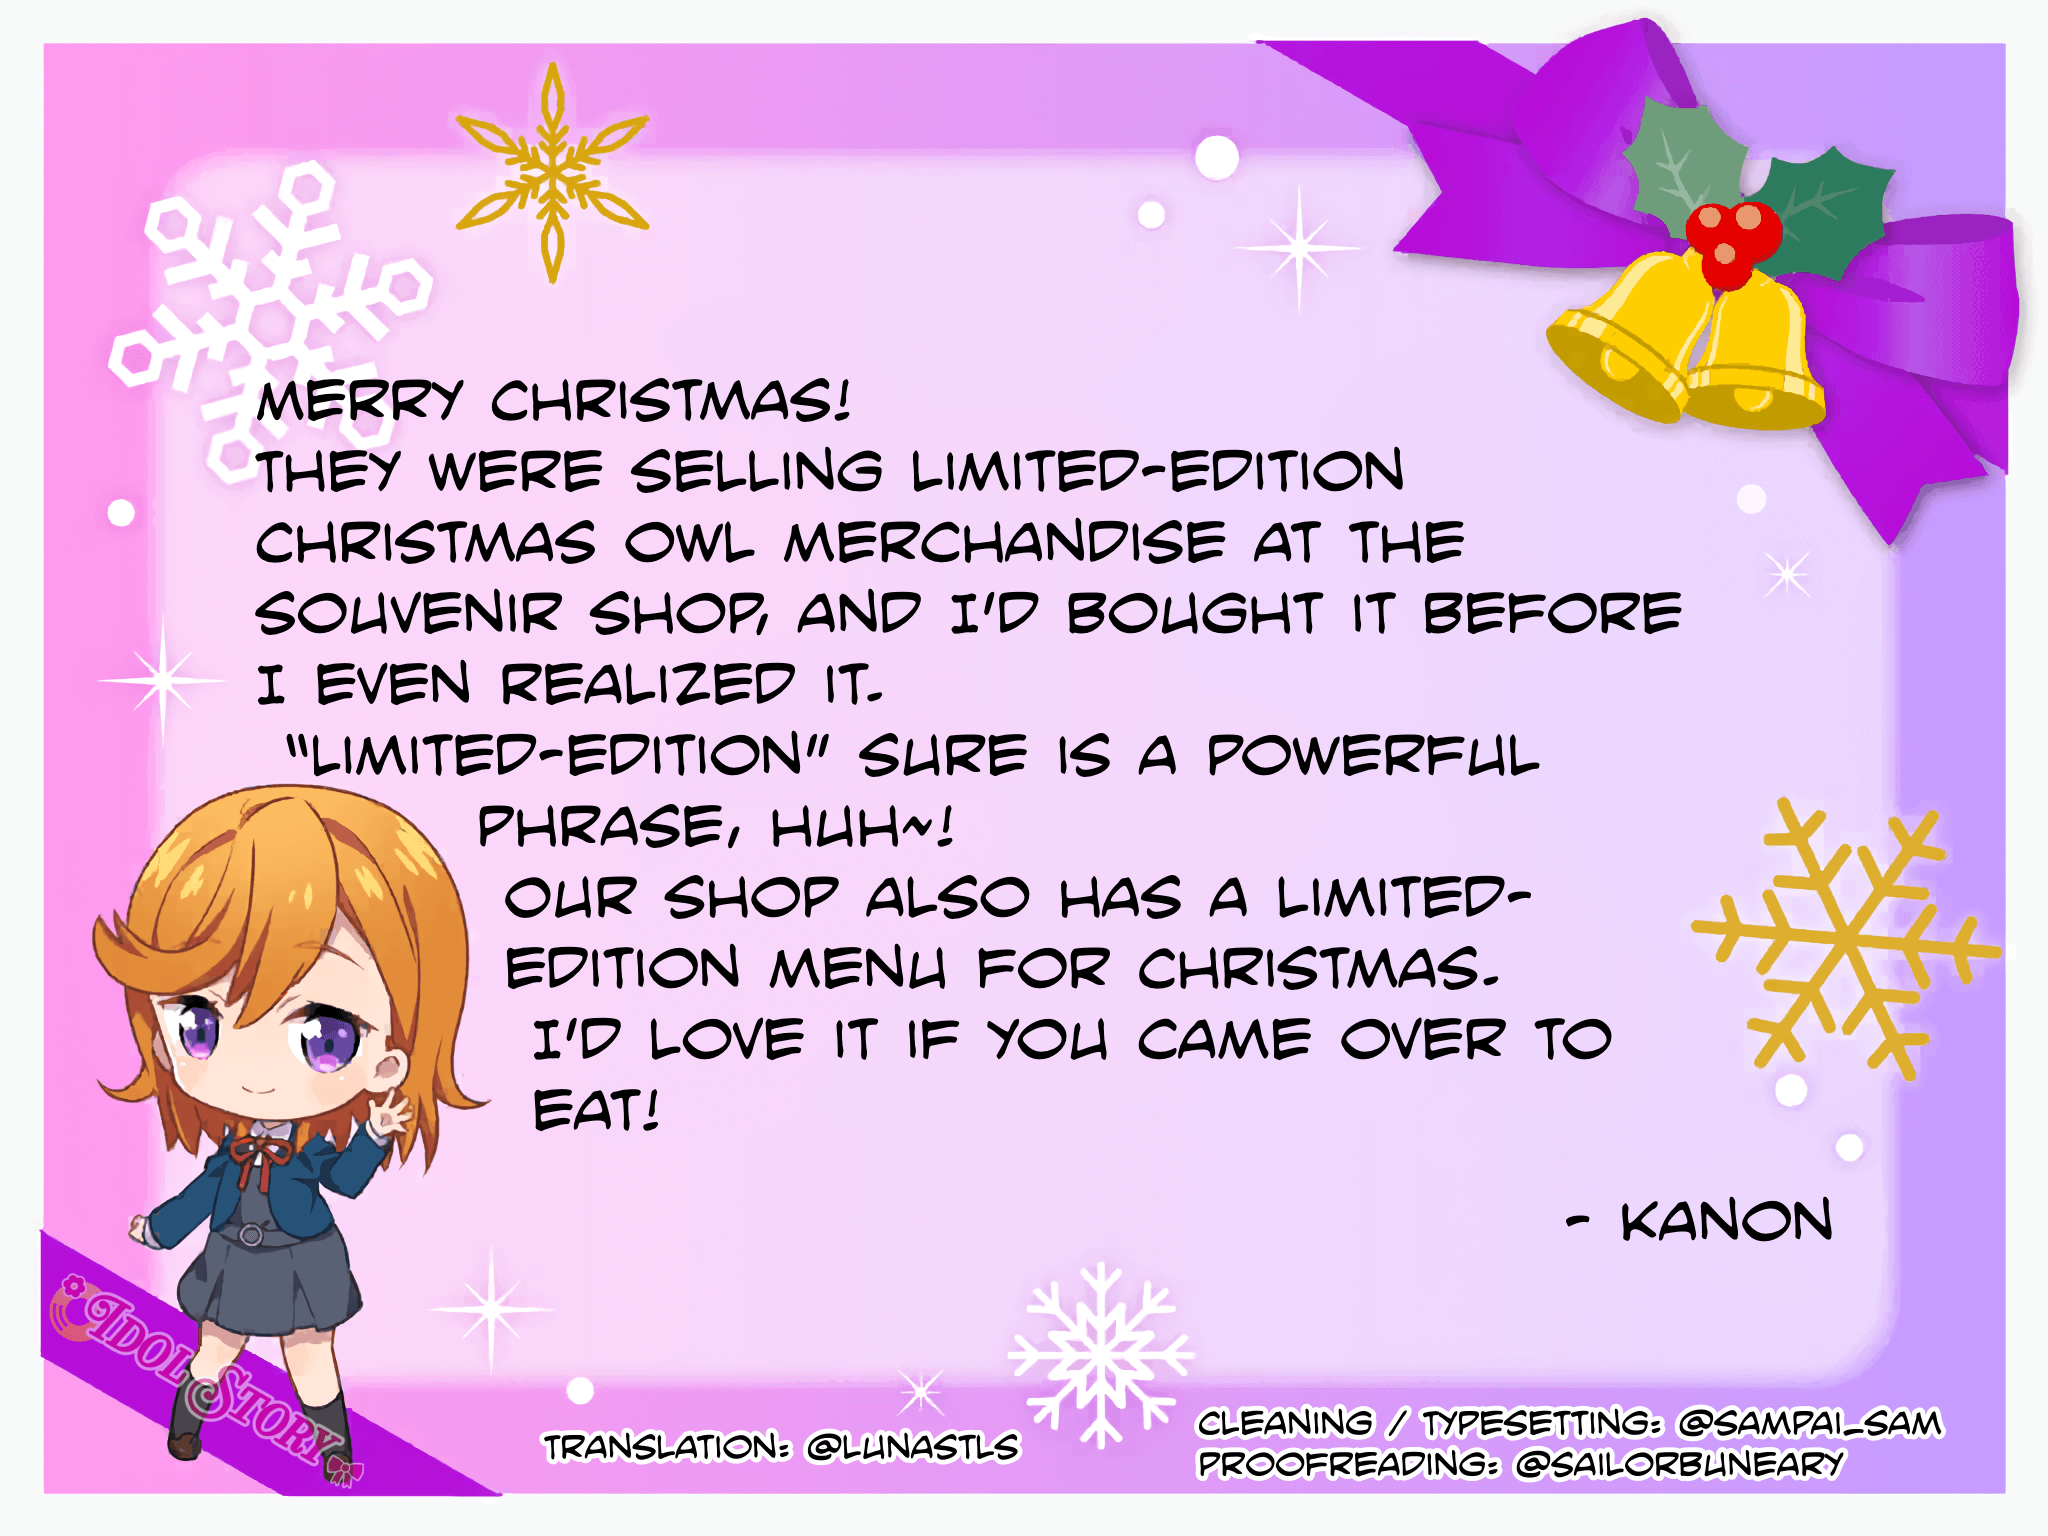 Kanon's Christmas Card